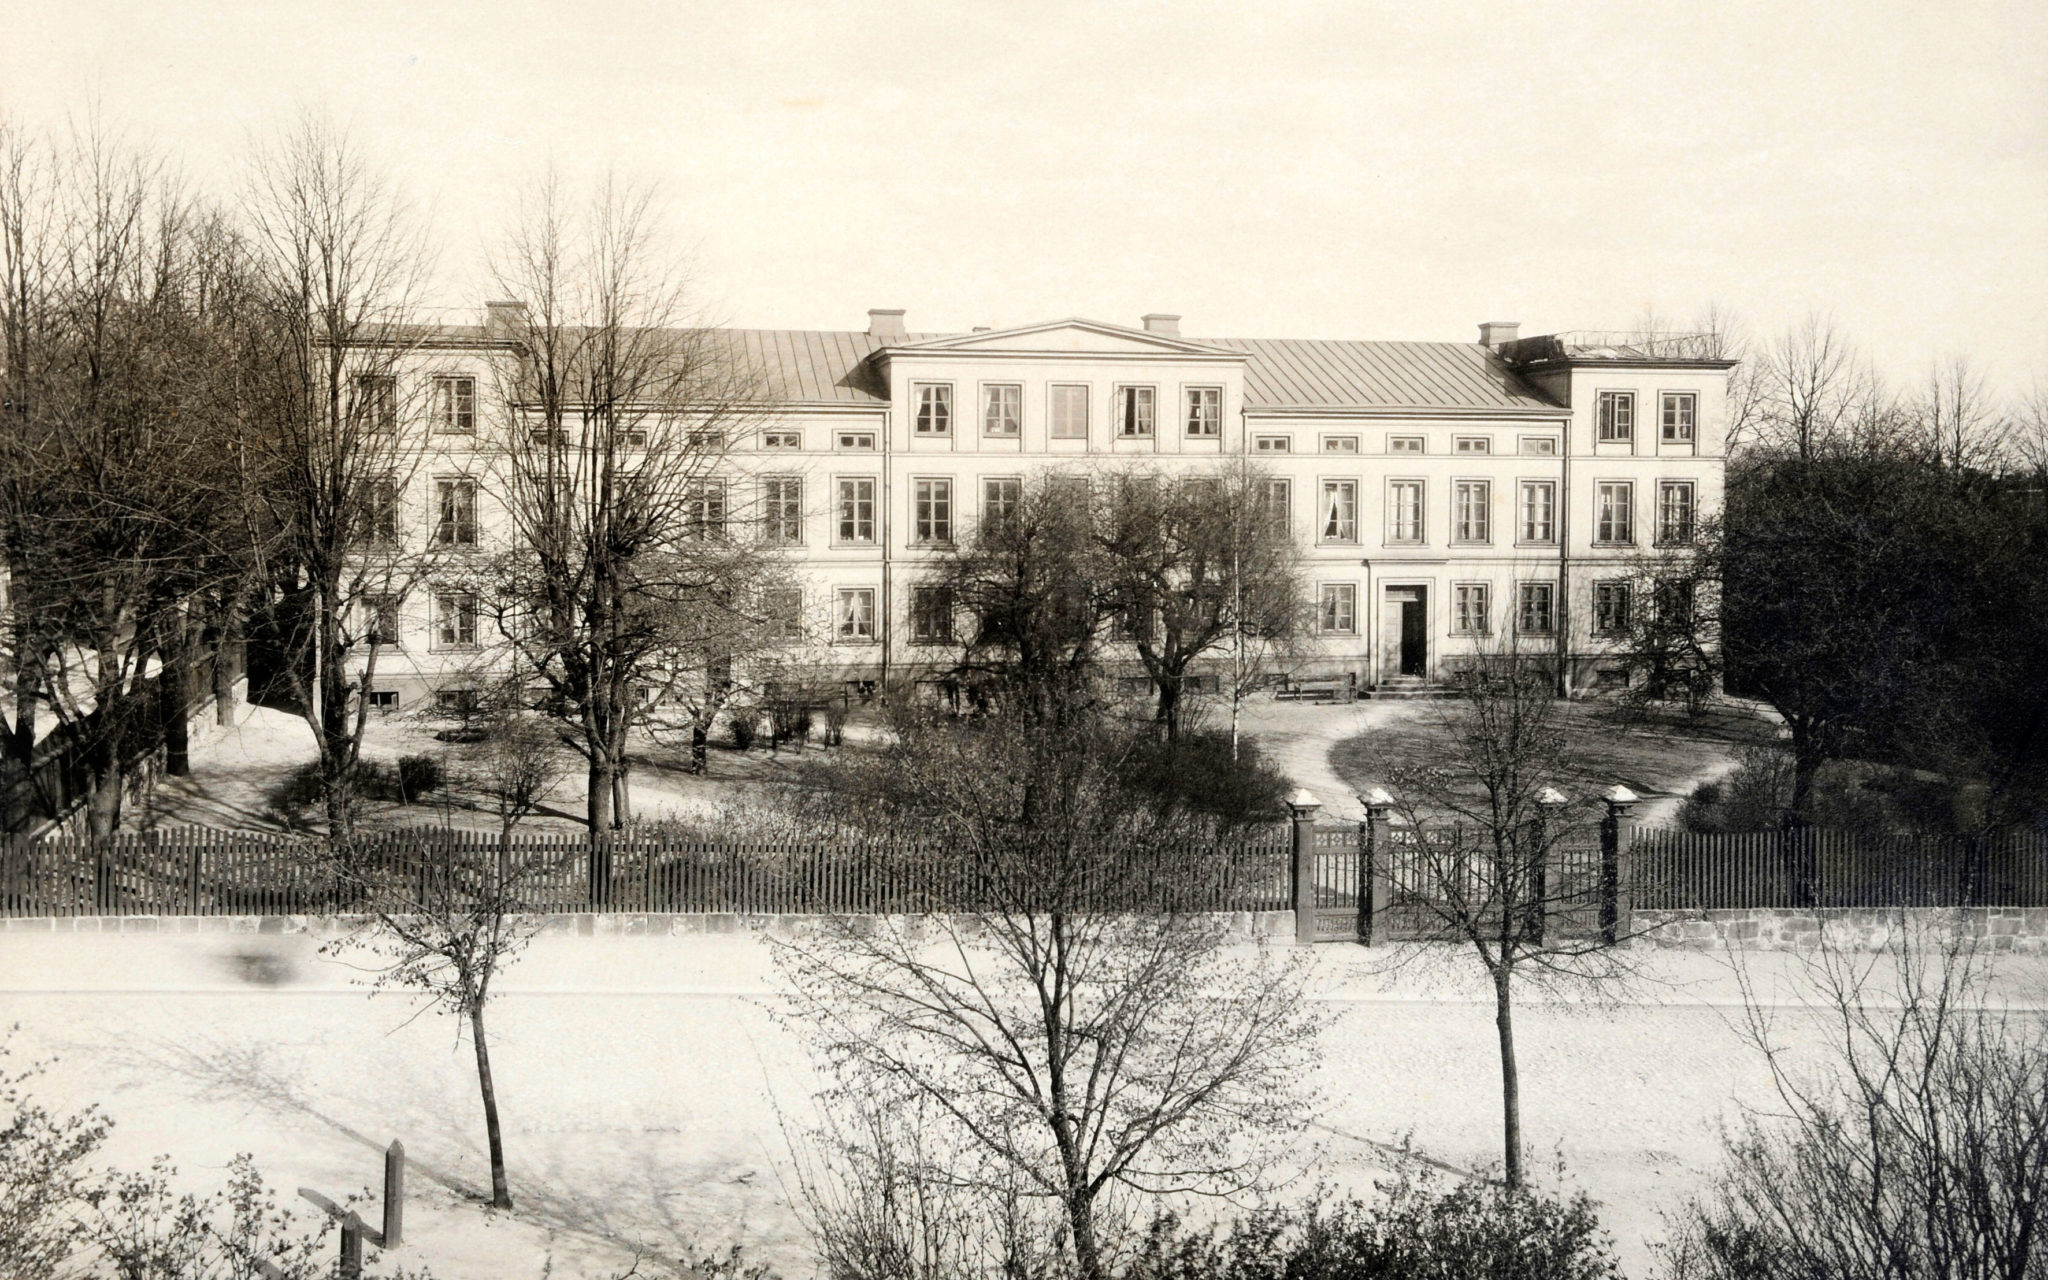 Vita huset 1901. Foto: Per Bagge, från UB:s bildsamlingar, Lunds universitet.